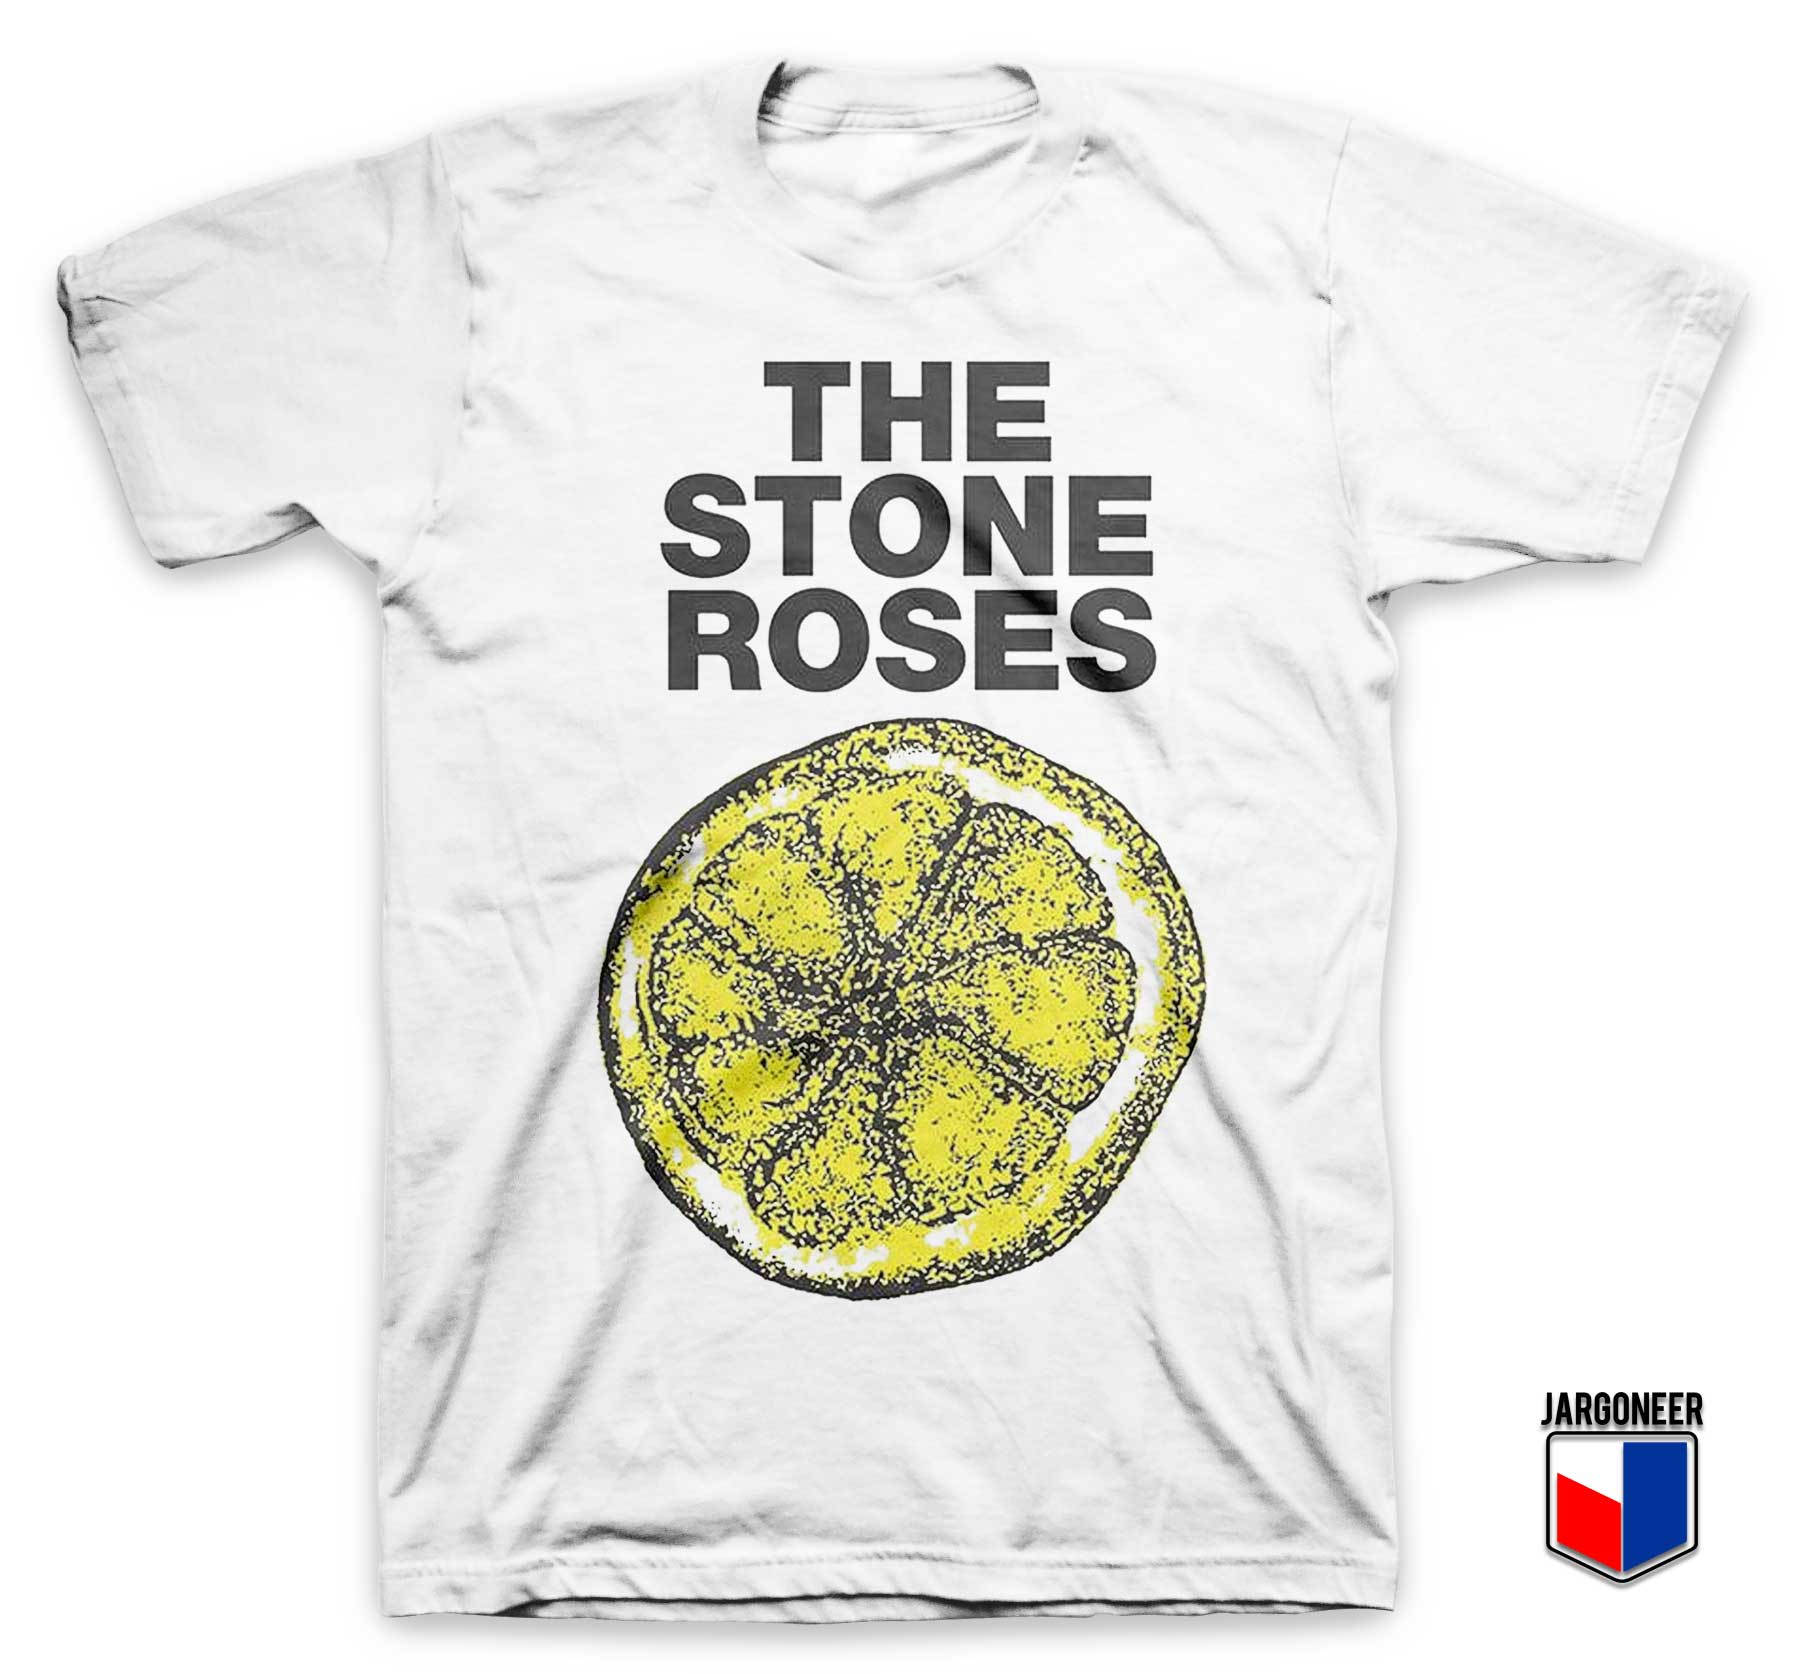 The Stone Roses T Shirt - Shop Unique Graphic Cool Shirt Designs